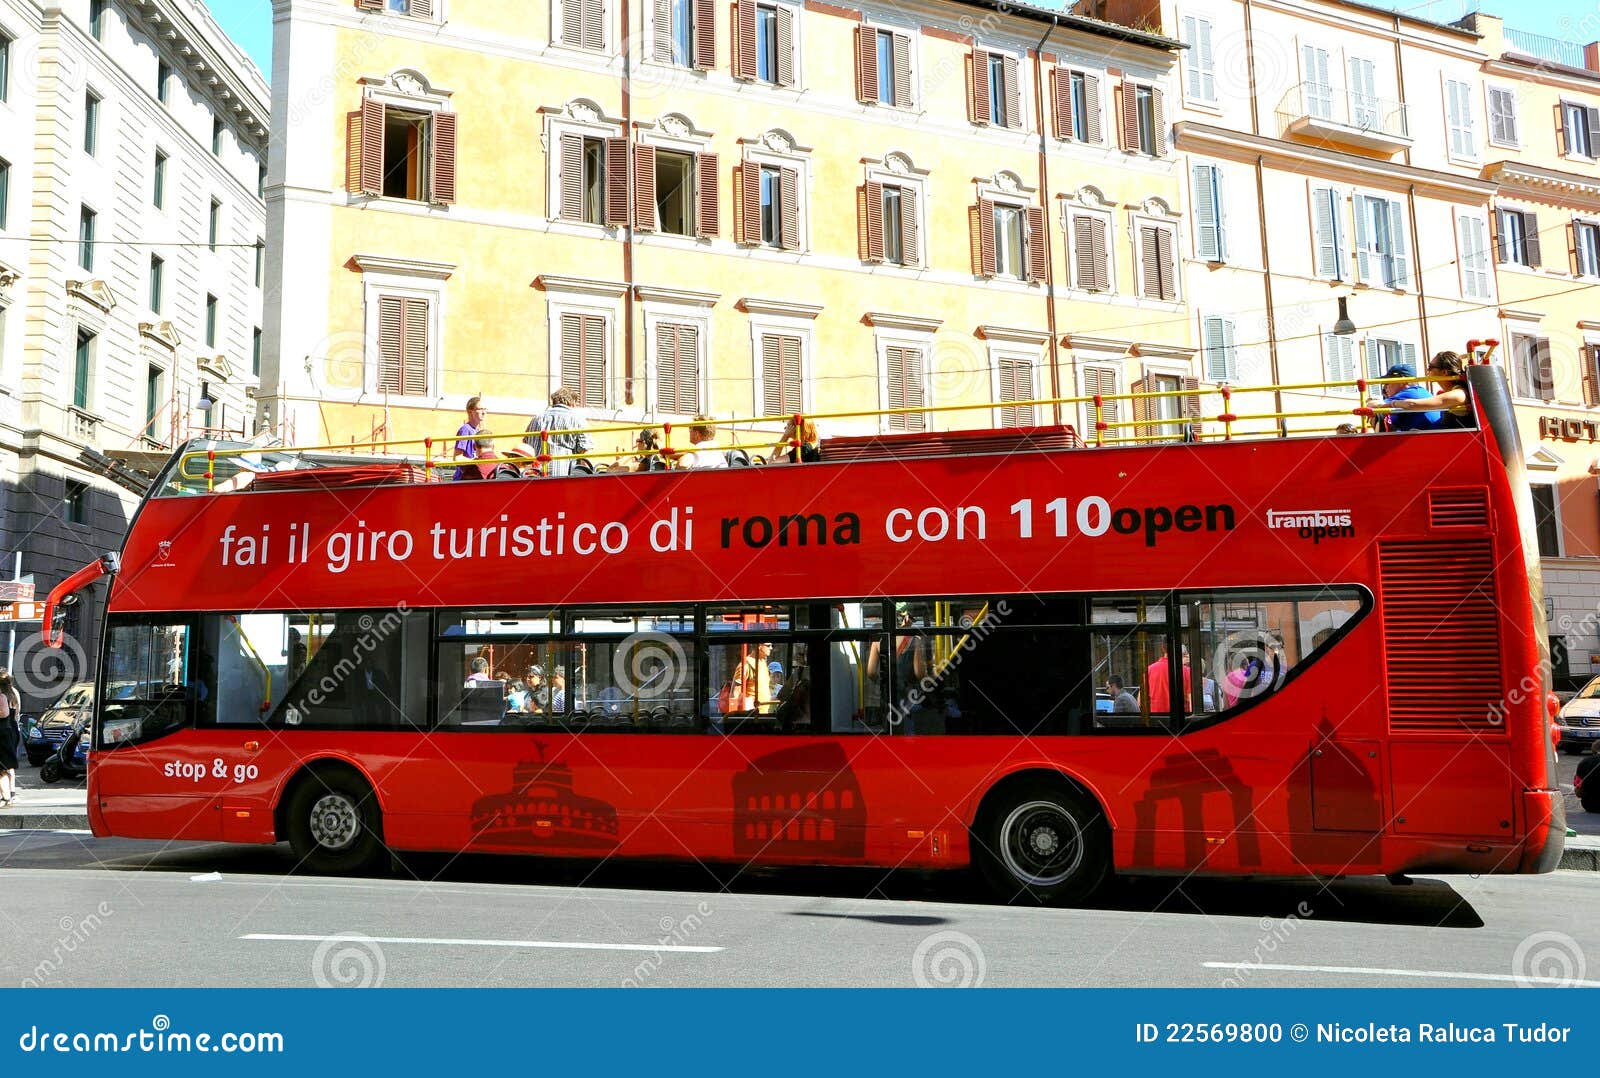 voyage en italie en bus